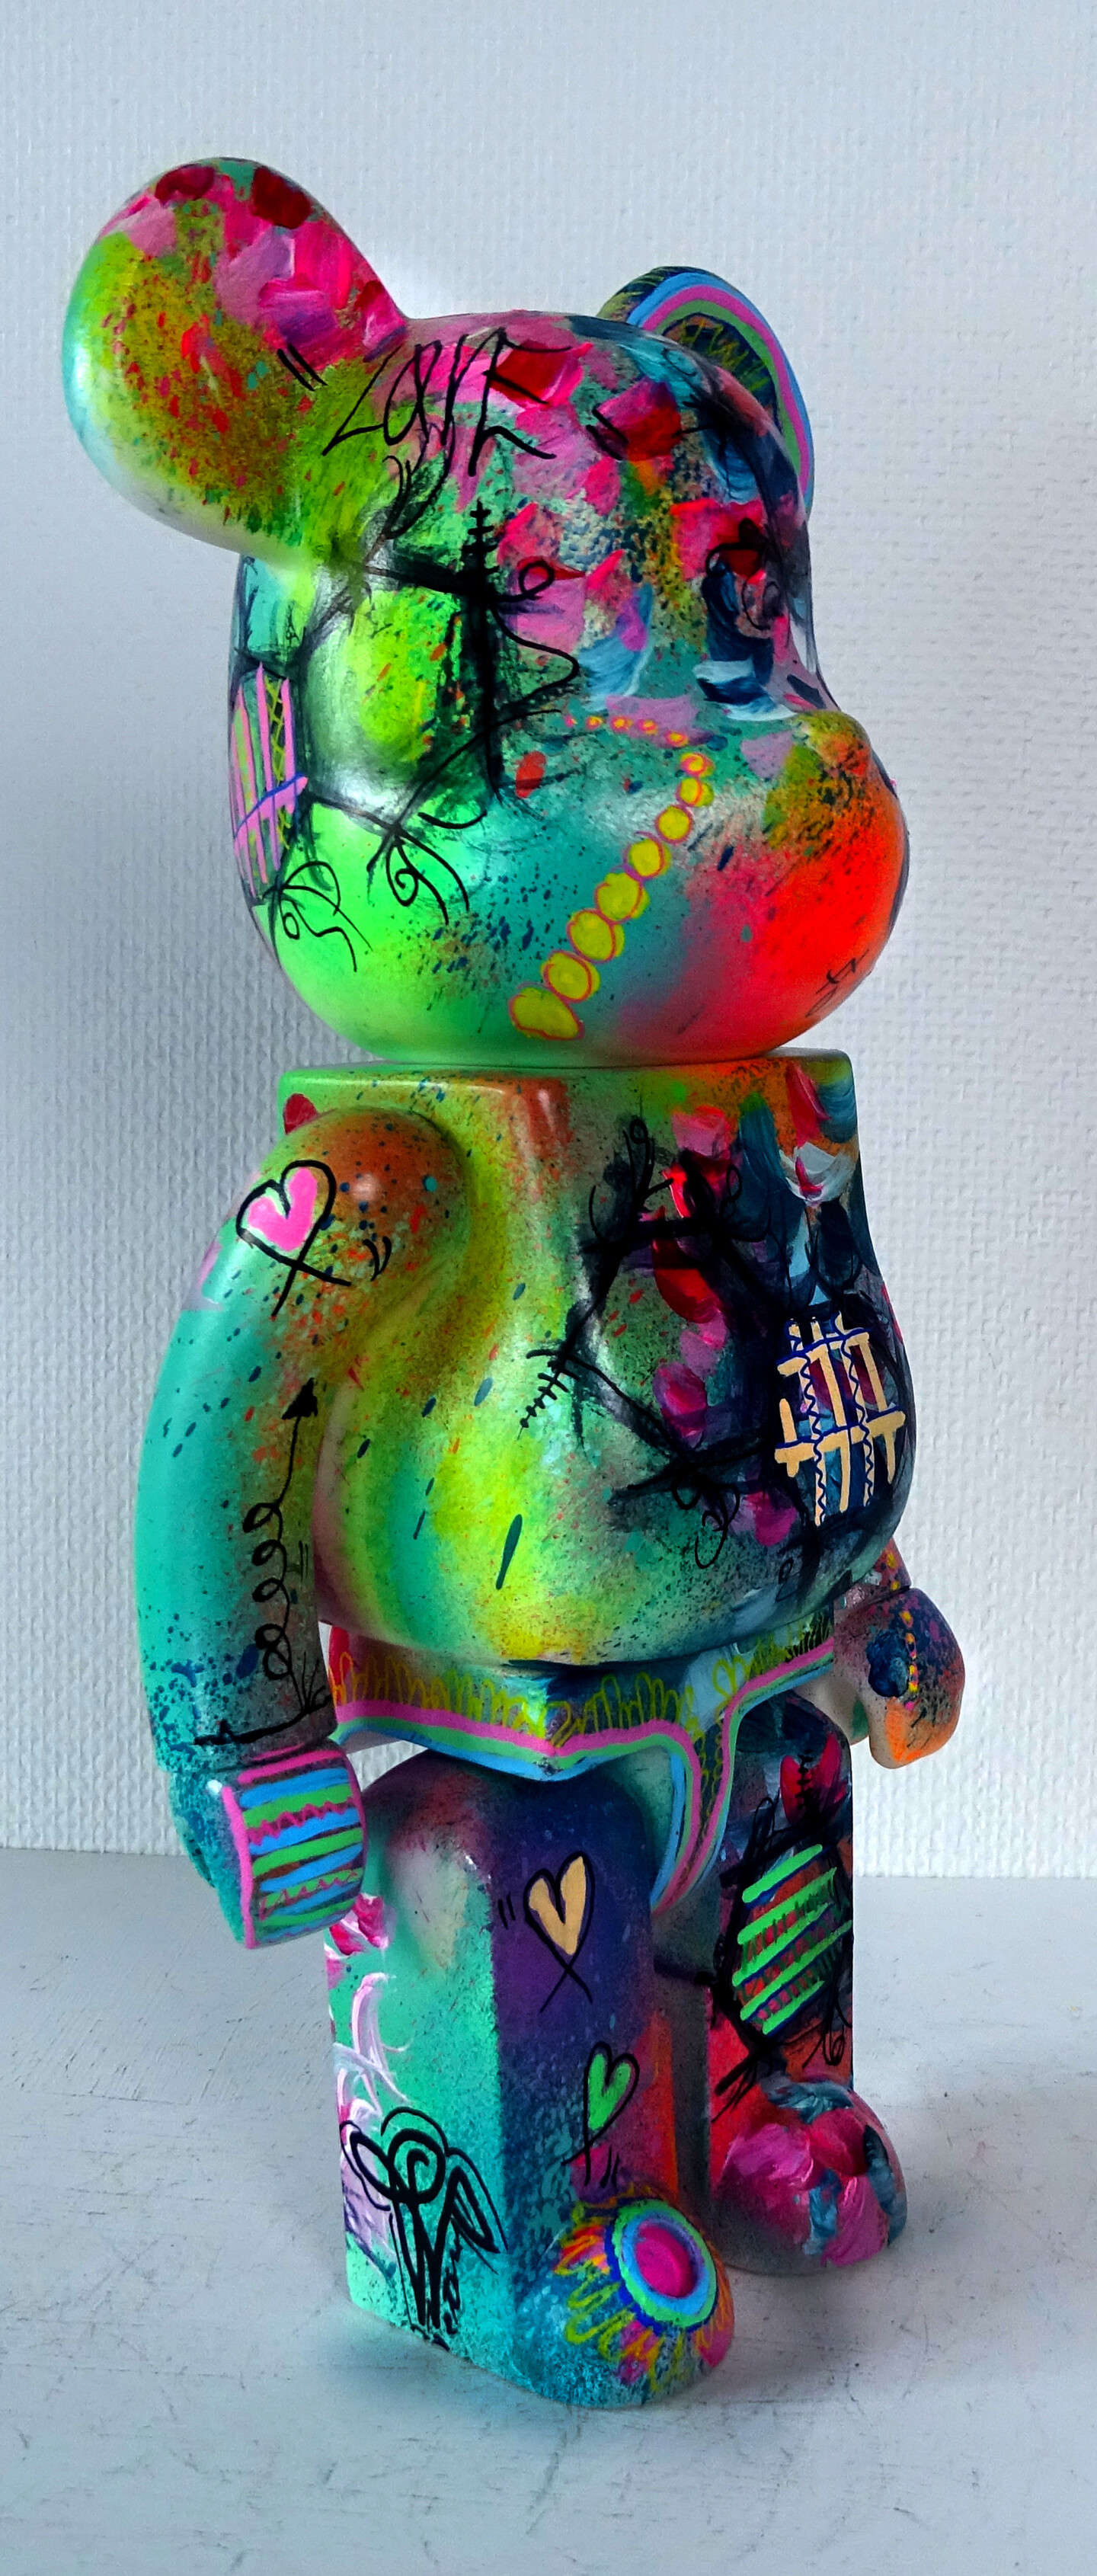 Bearbrick 400% Pop Art Colored Statue Or, Sculpture par Priscilla